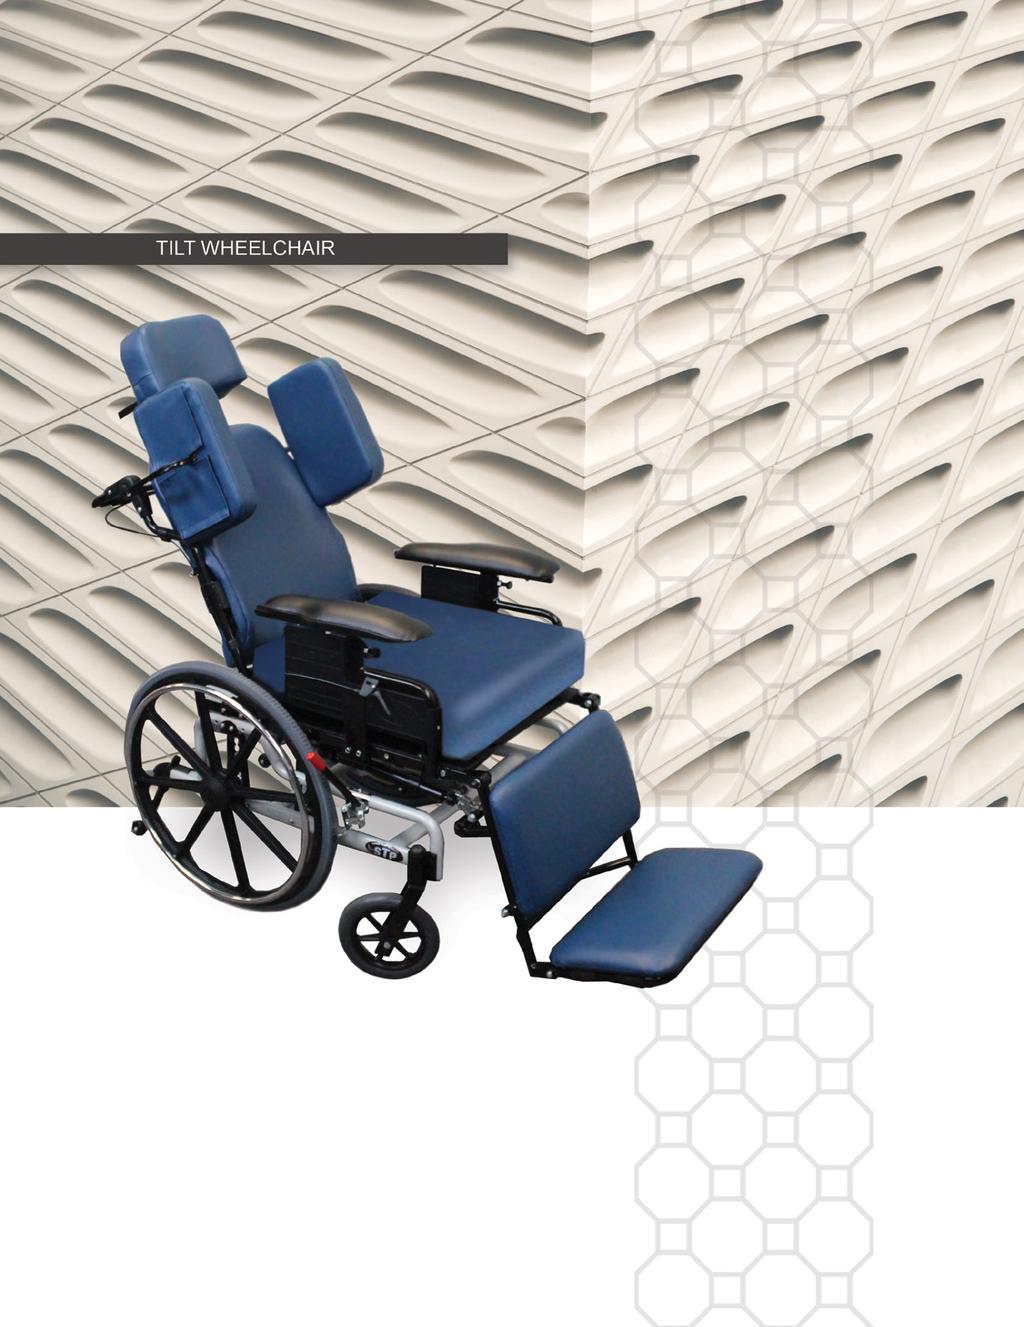 NV TILT The NV TILT is a light weight tilt chair designed for adjustment and maneuverability.